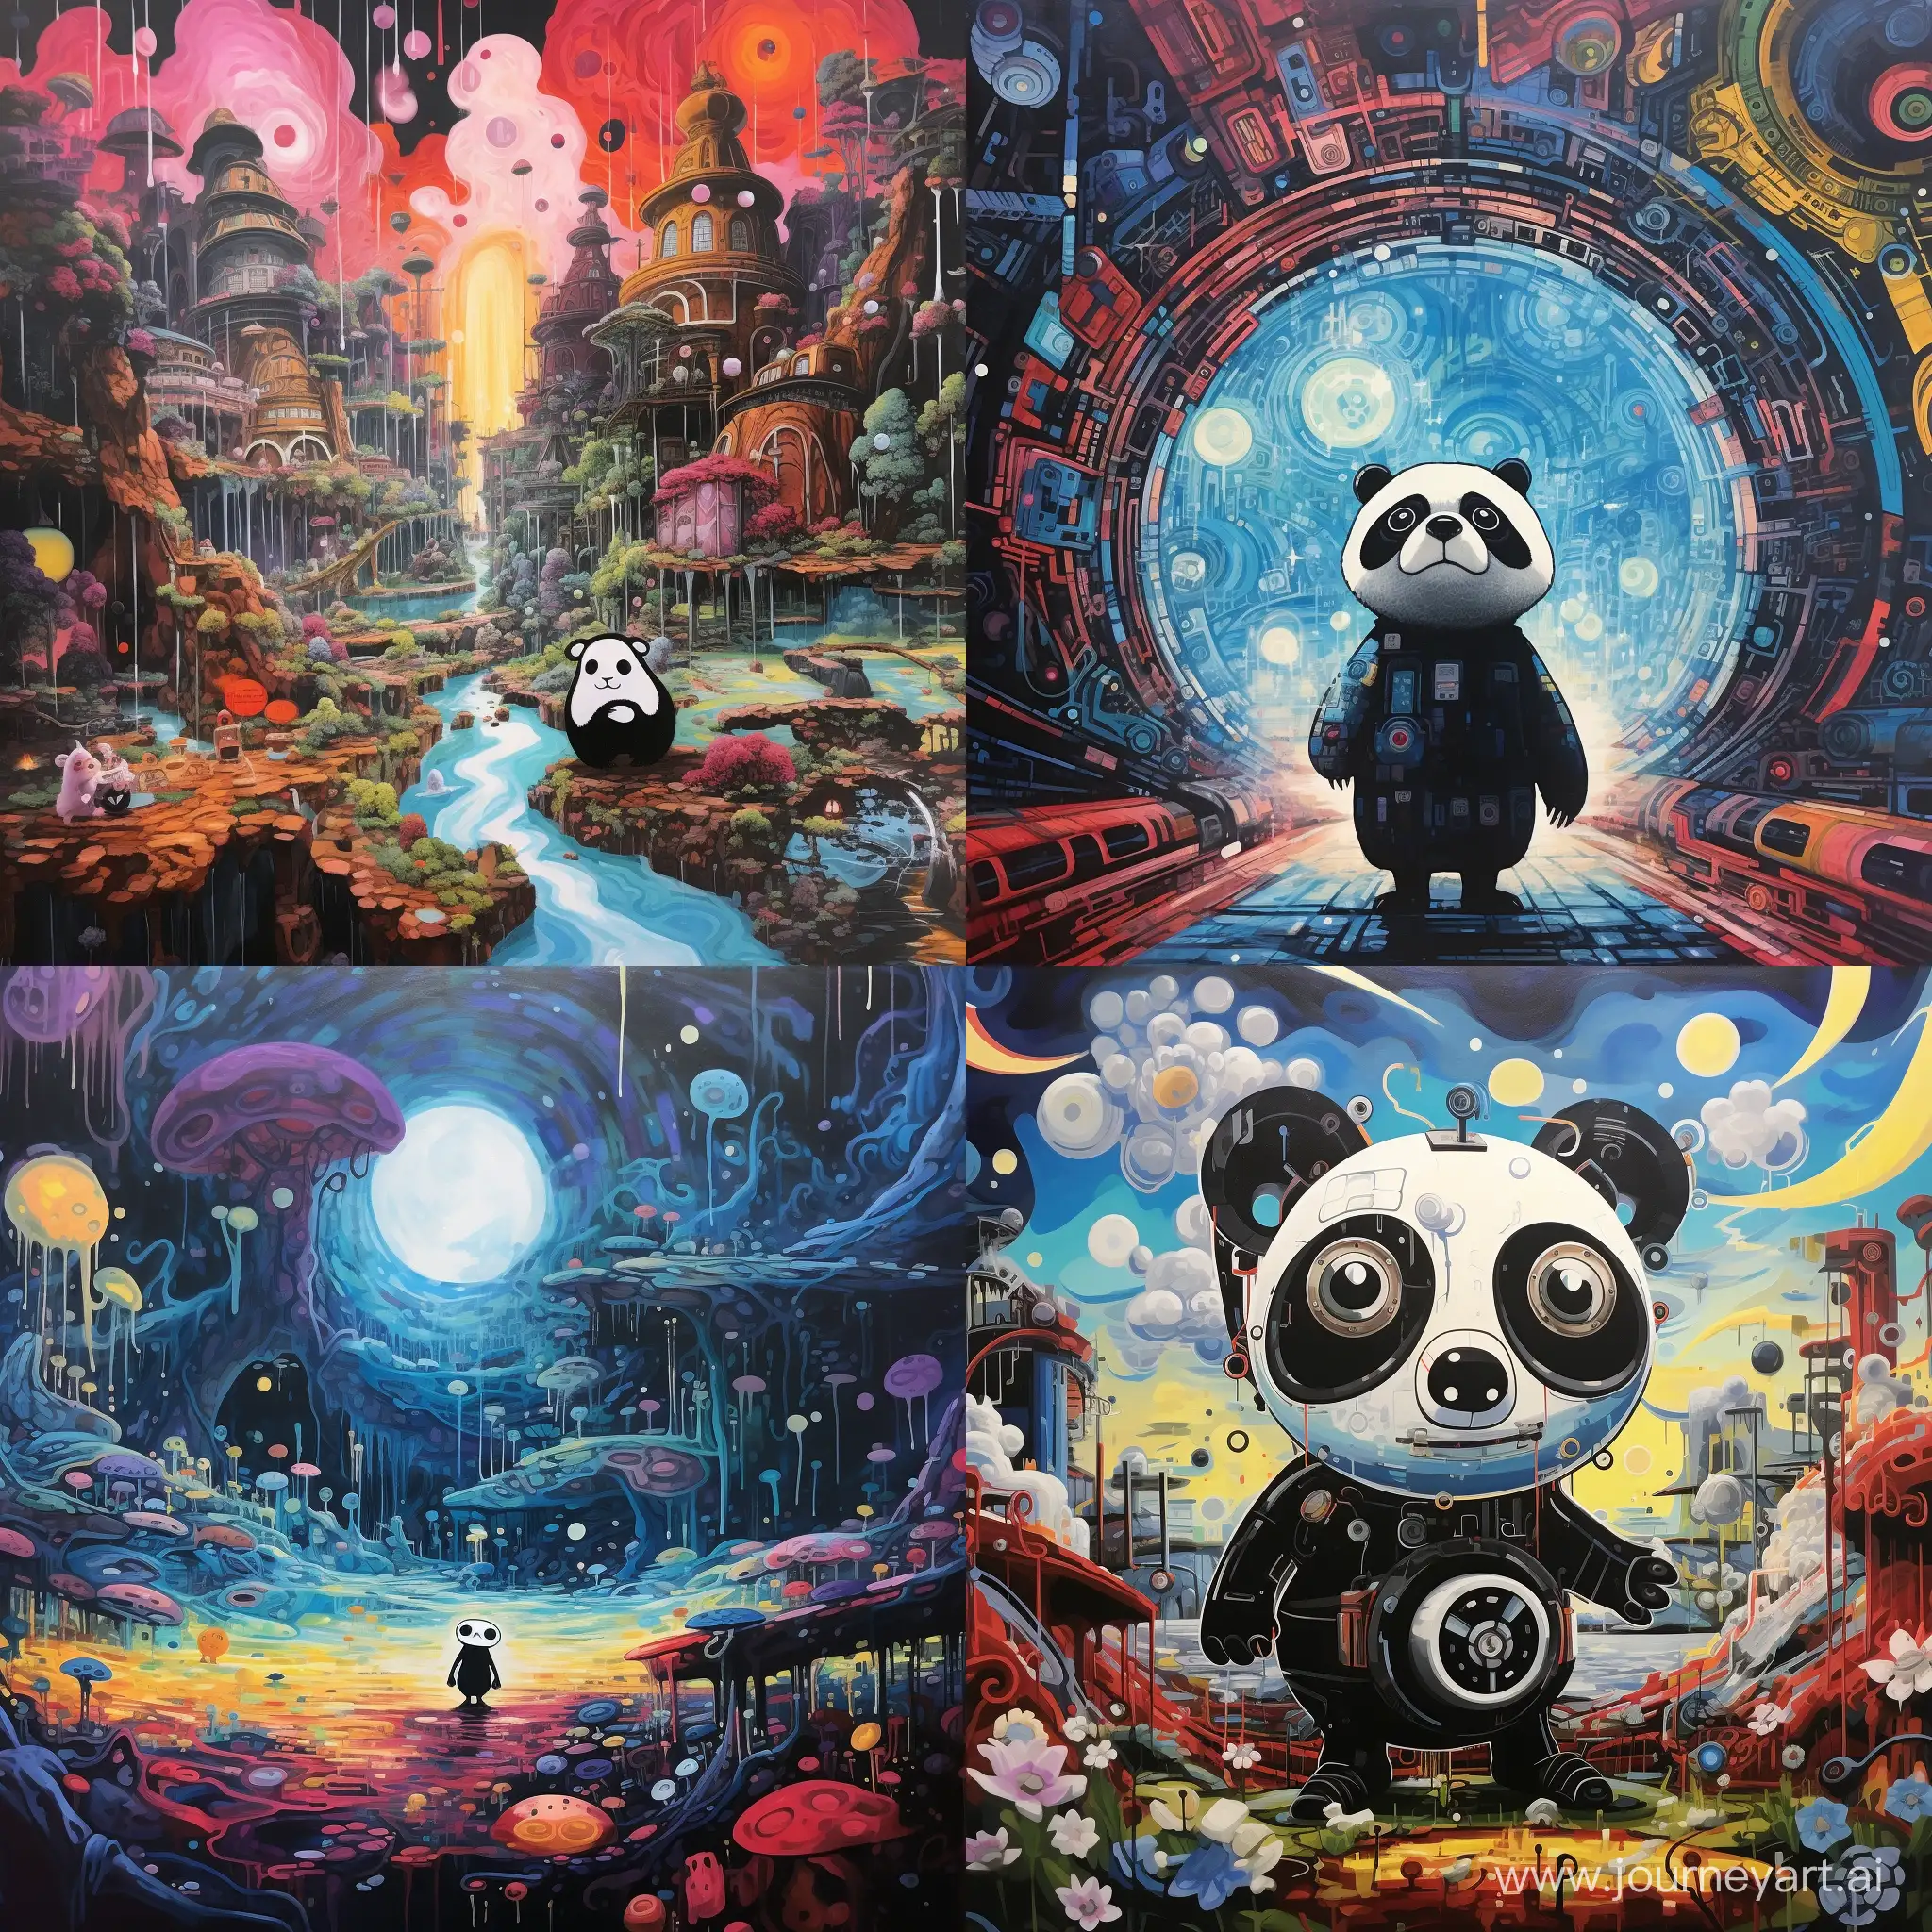 gaint panda in the future world, x Miyazaki Hayao style, acrylic painting


